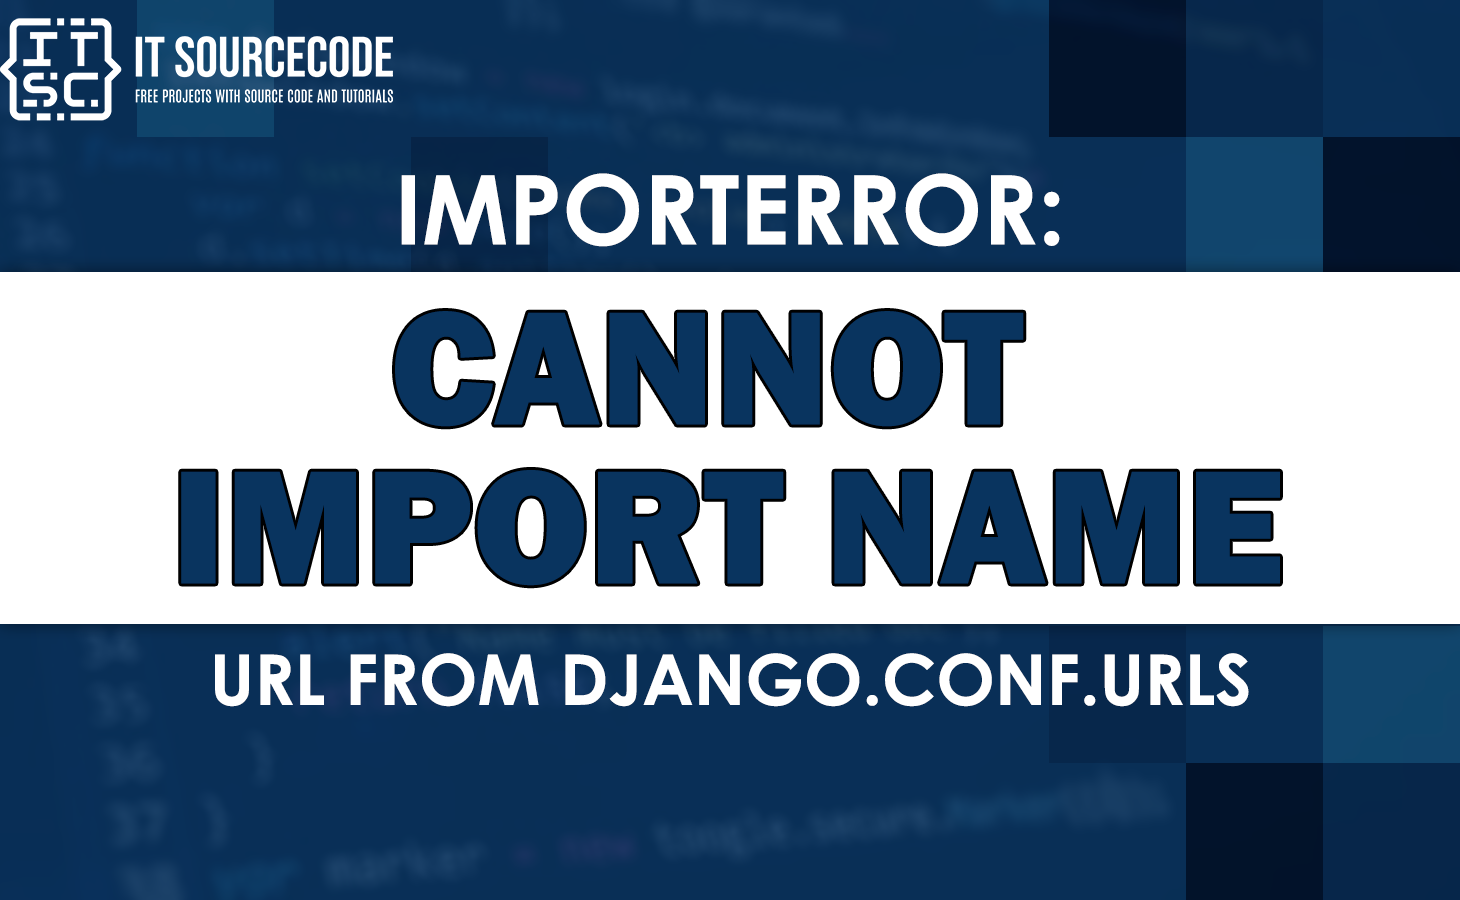 Importerror cannot import name url from django.conf.urls